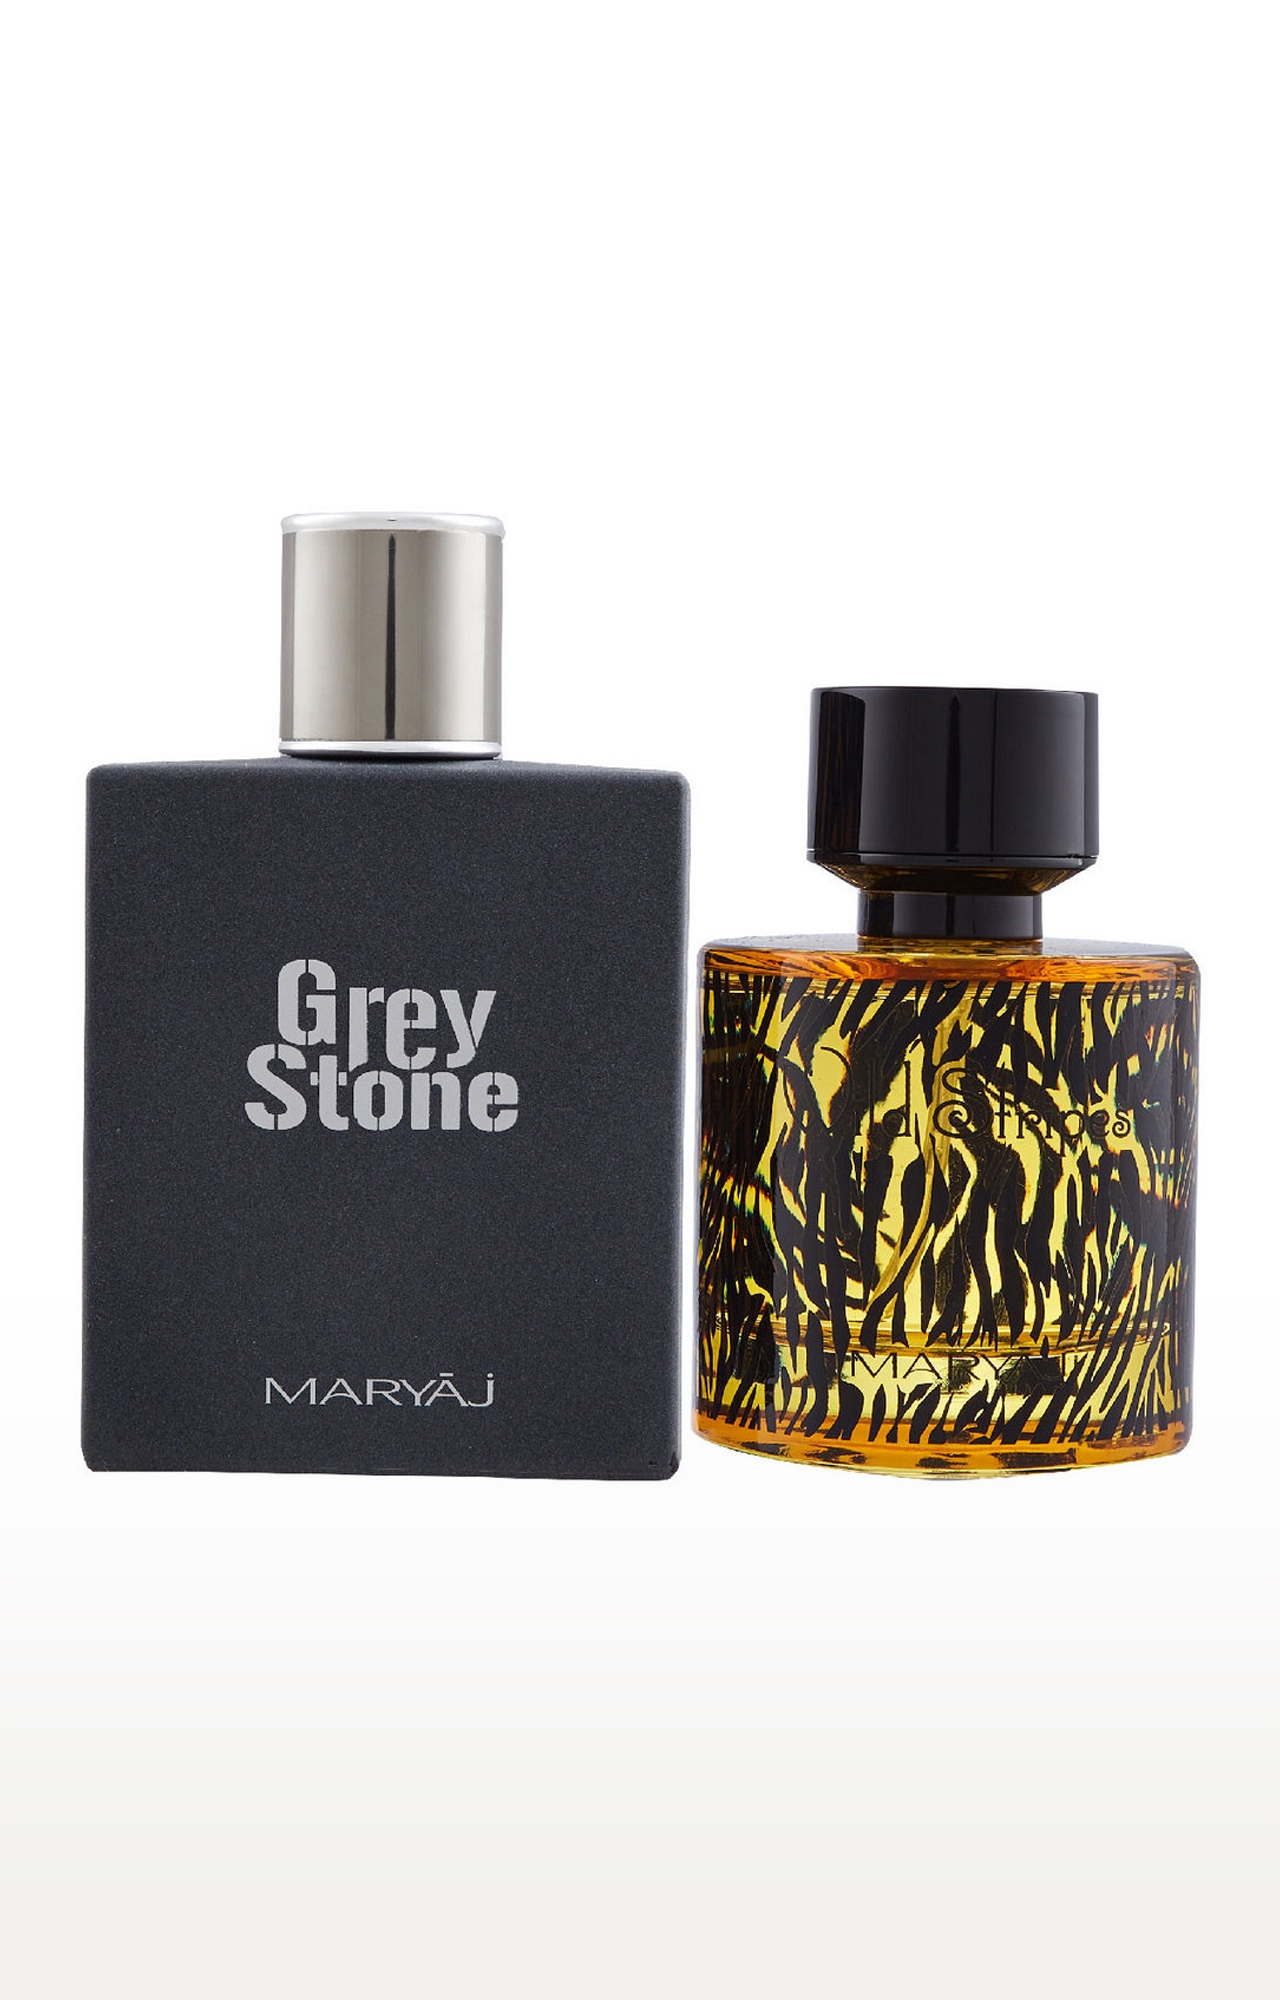 Maryaj | Maryaj Grey Stone Eau De Parfum Perfume 100ml for Men and Maryaj Wild Stripes Eau De Parfum Oriental Perfume 100ml for Men 0